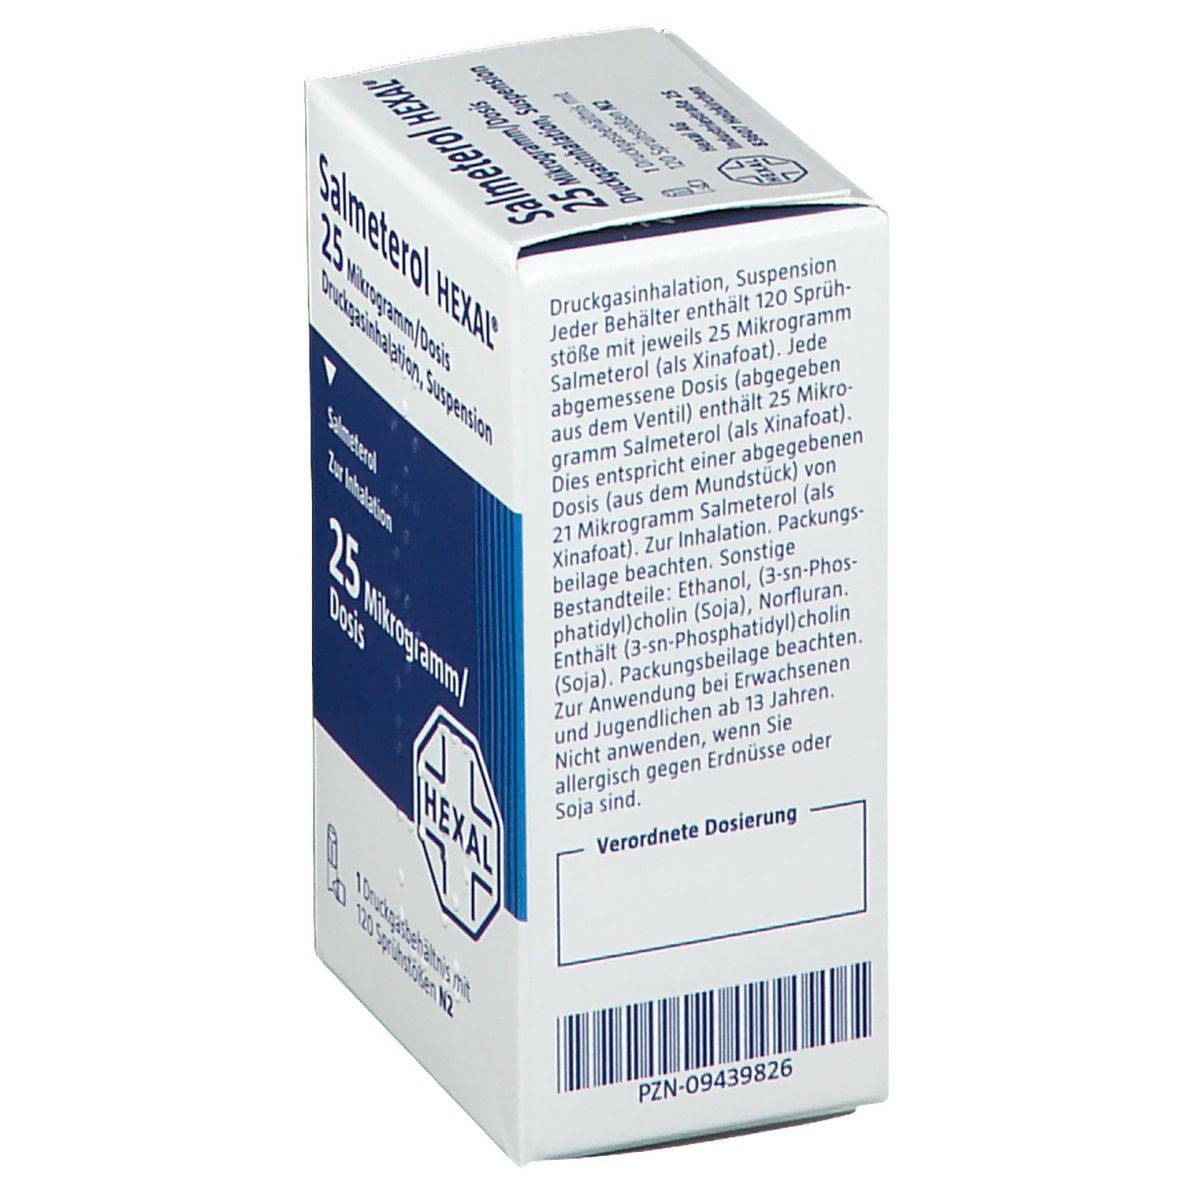 Salmeterol HEXAL® 25 Mikrogramm/Dosis